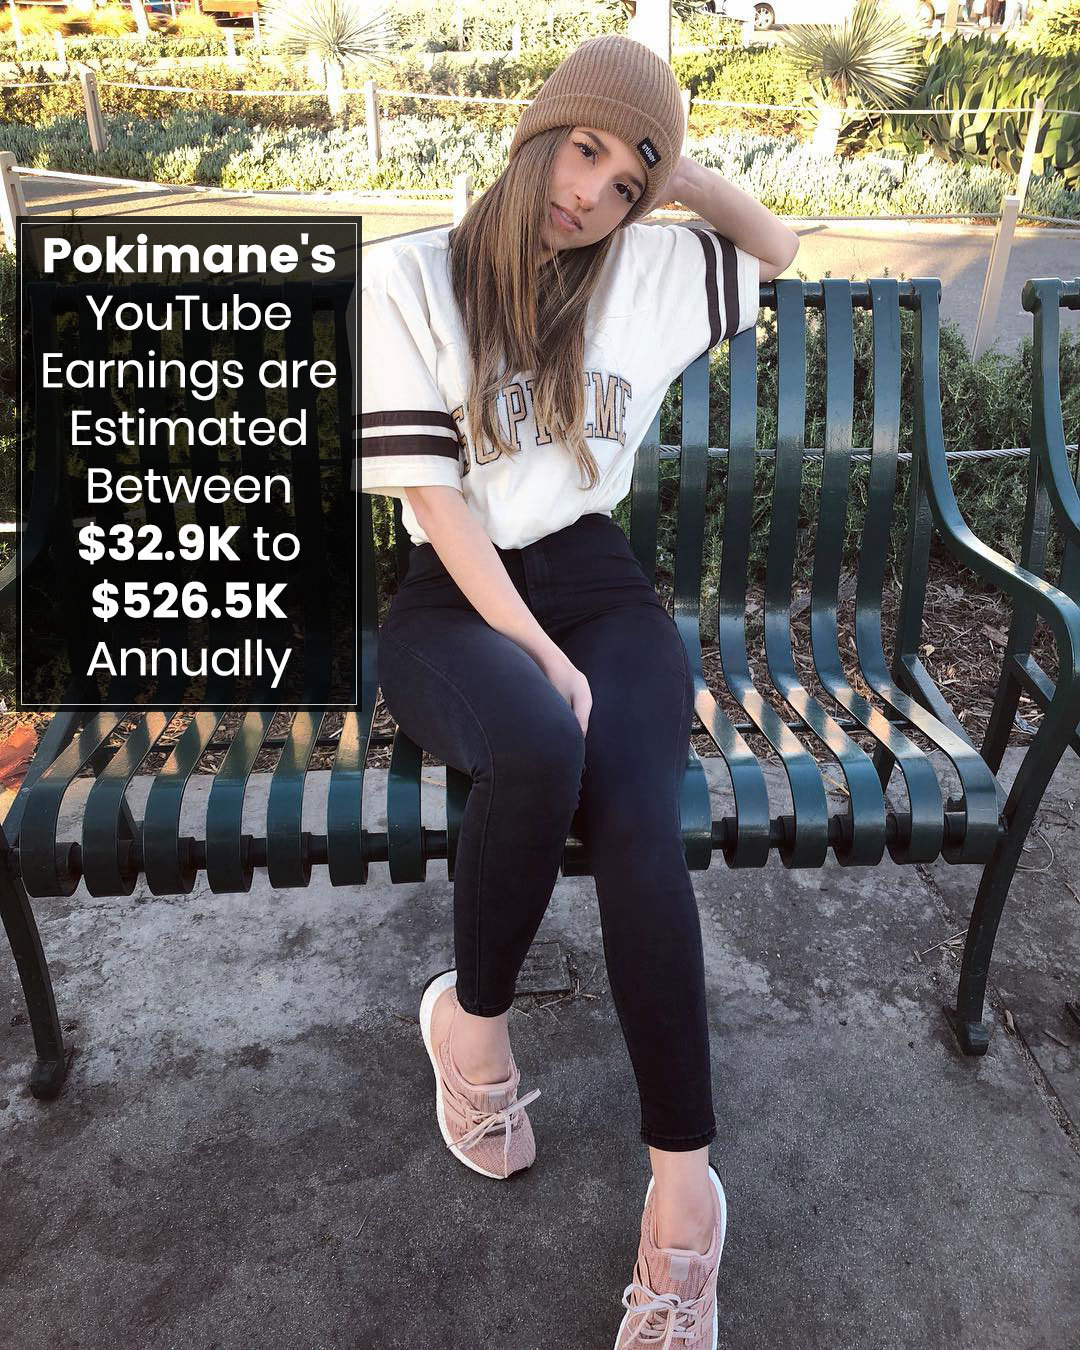 Pokimane's YouTube Earnings